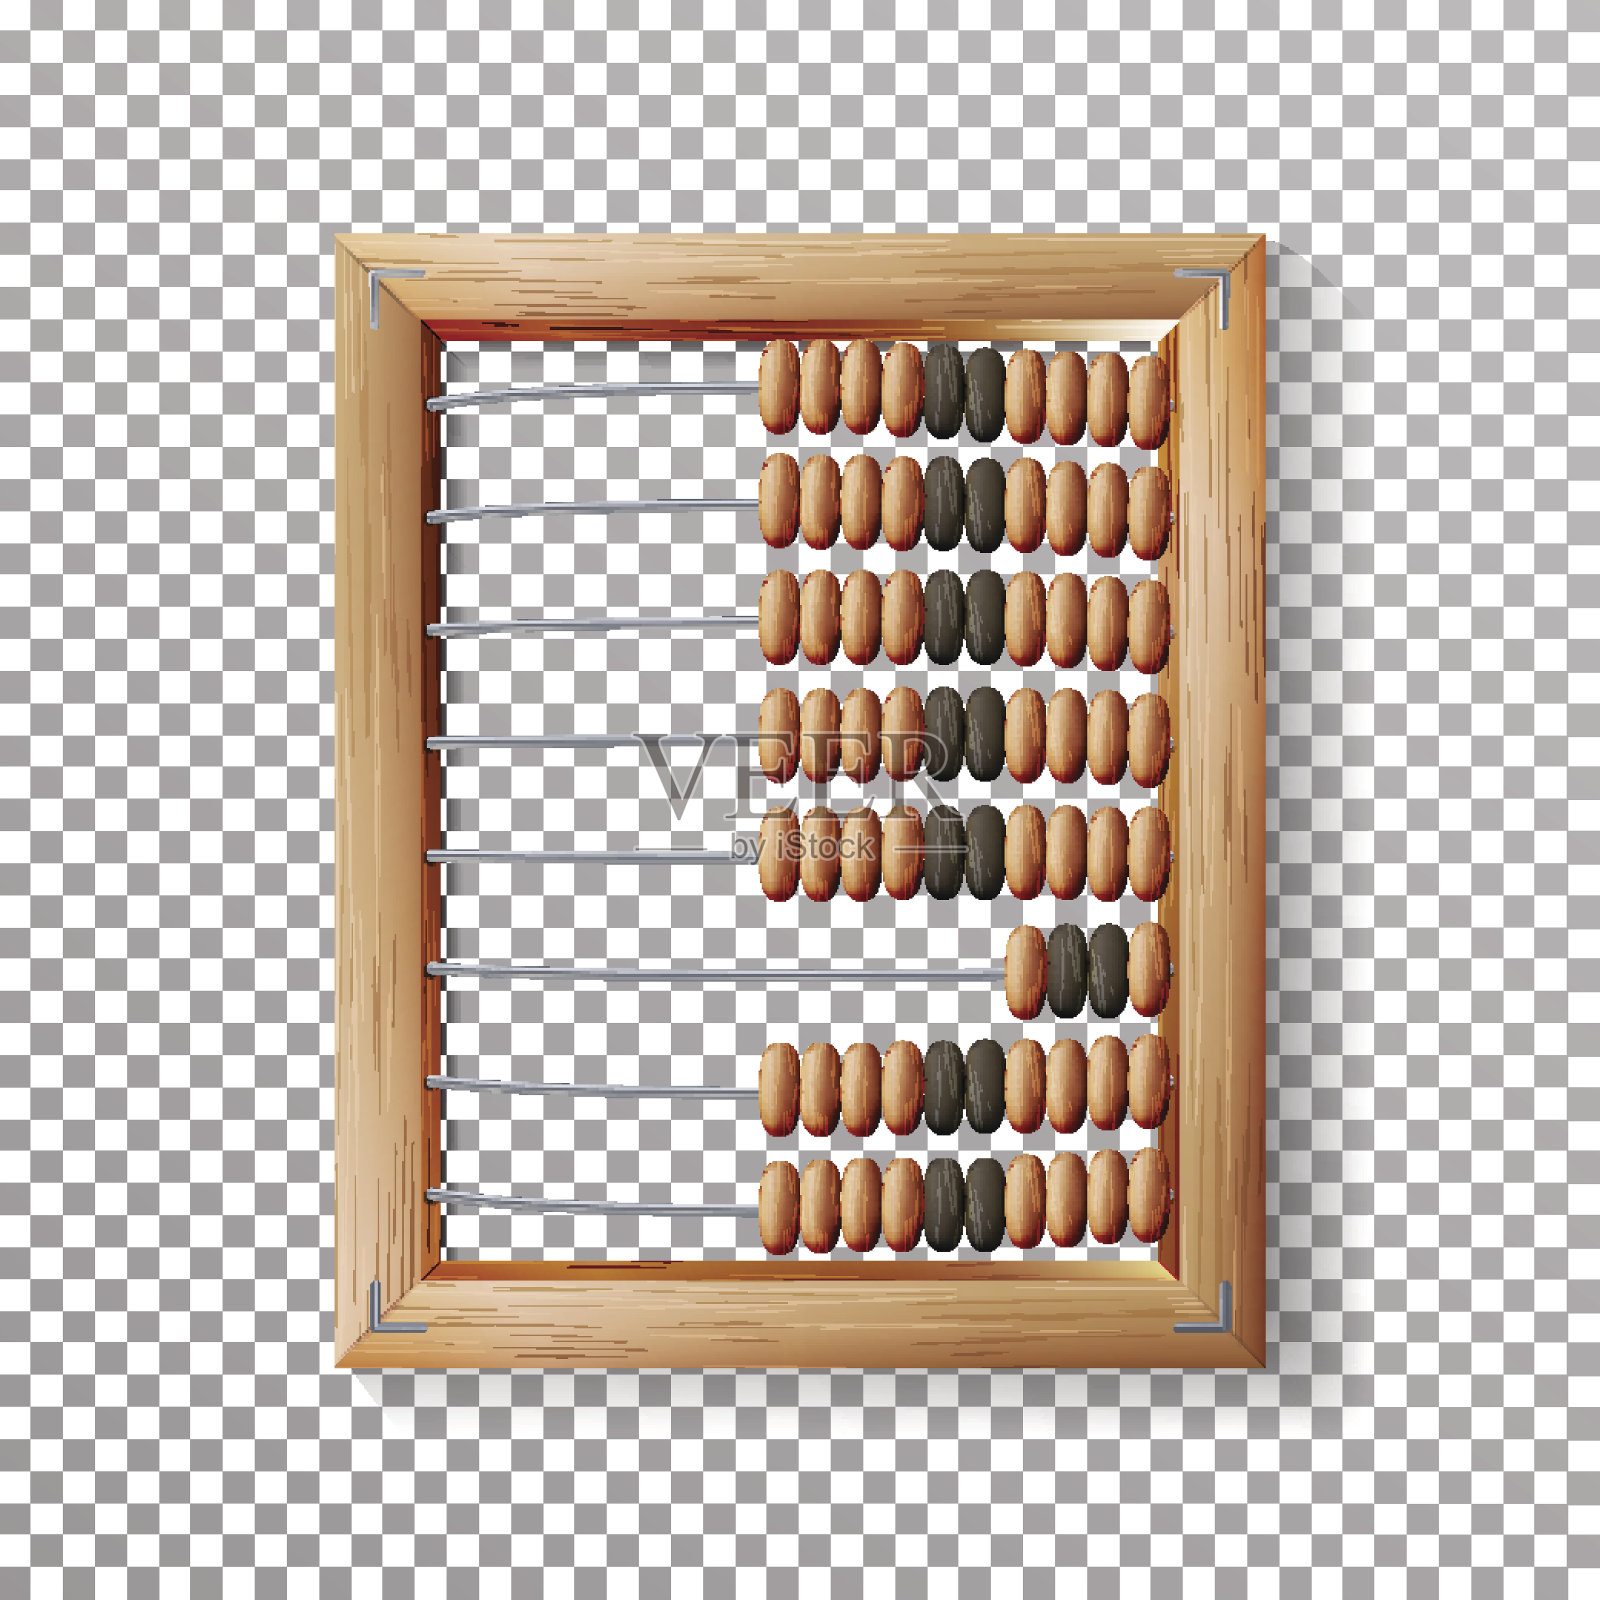 Abacus集向量。经典的木制老算盘。算术工具设备。透明背景下隔离插画图片素材